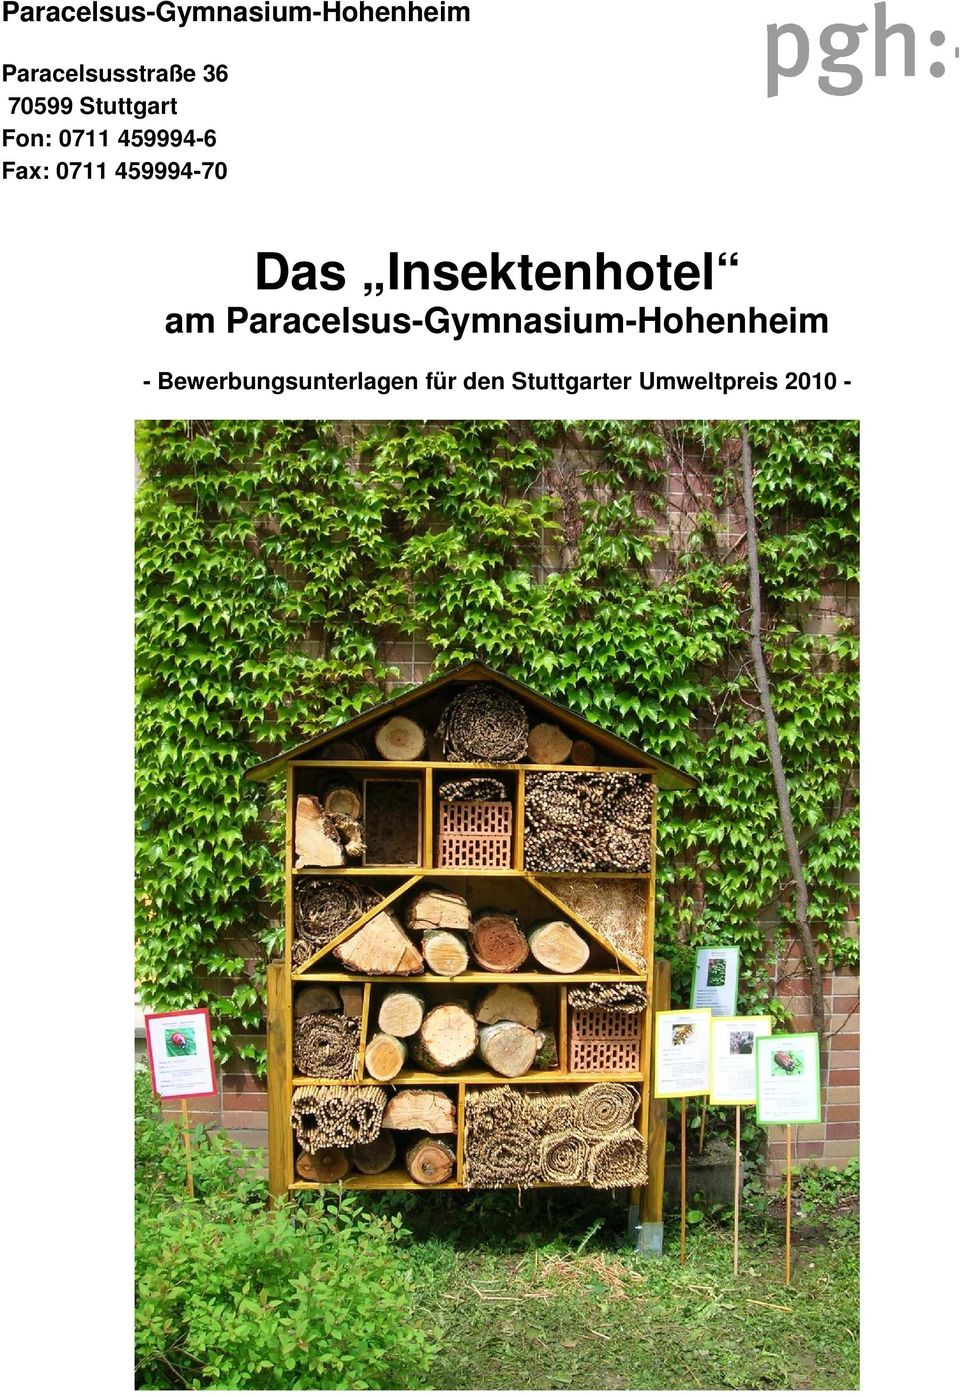 Das Insektenhotel am Paracelsus-Gymnasium-Hohenheim -